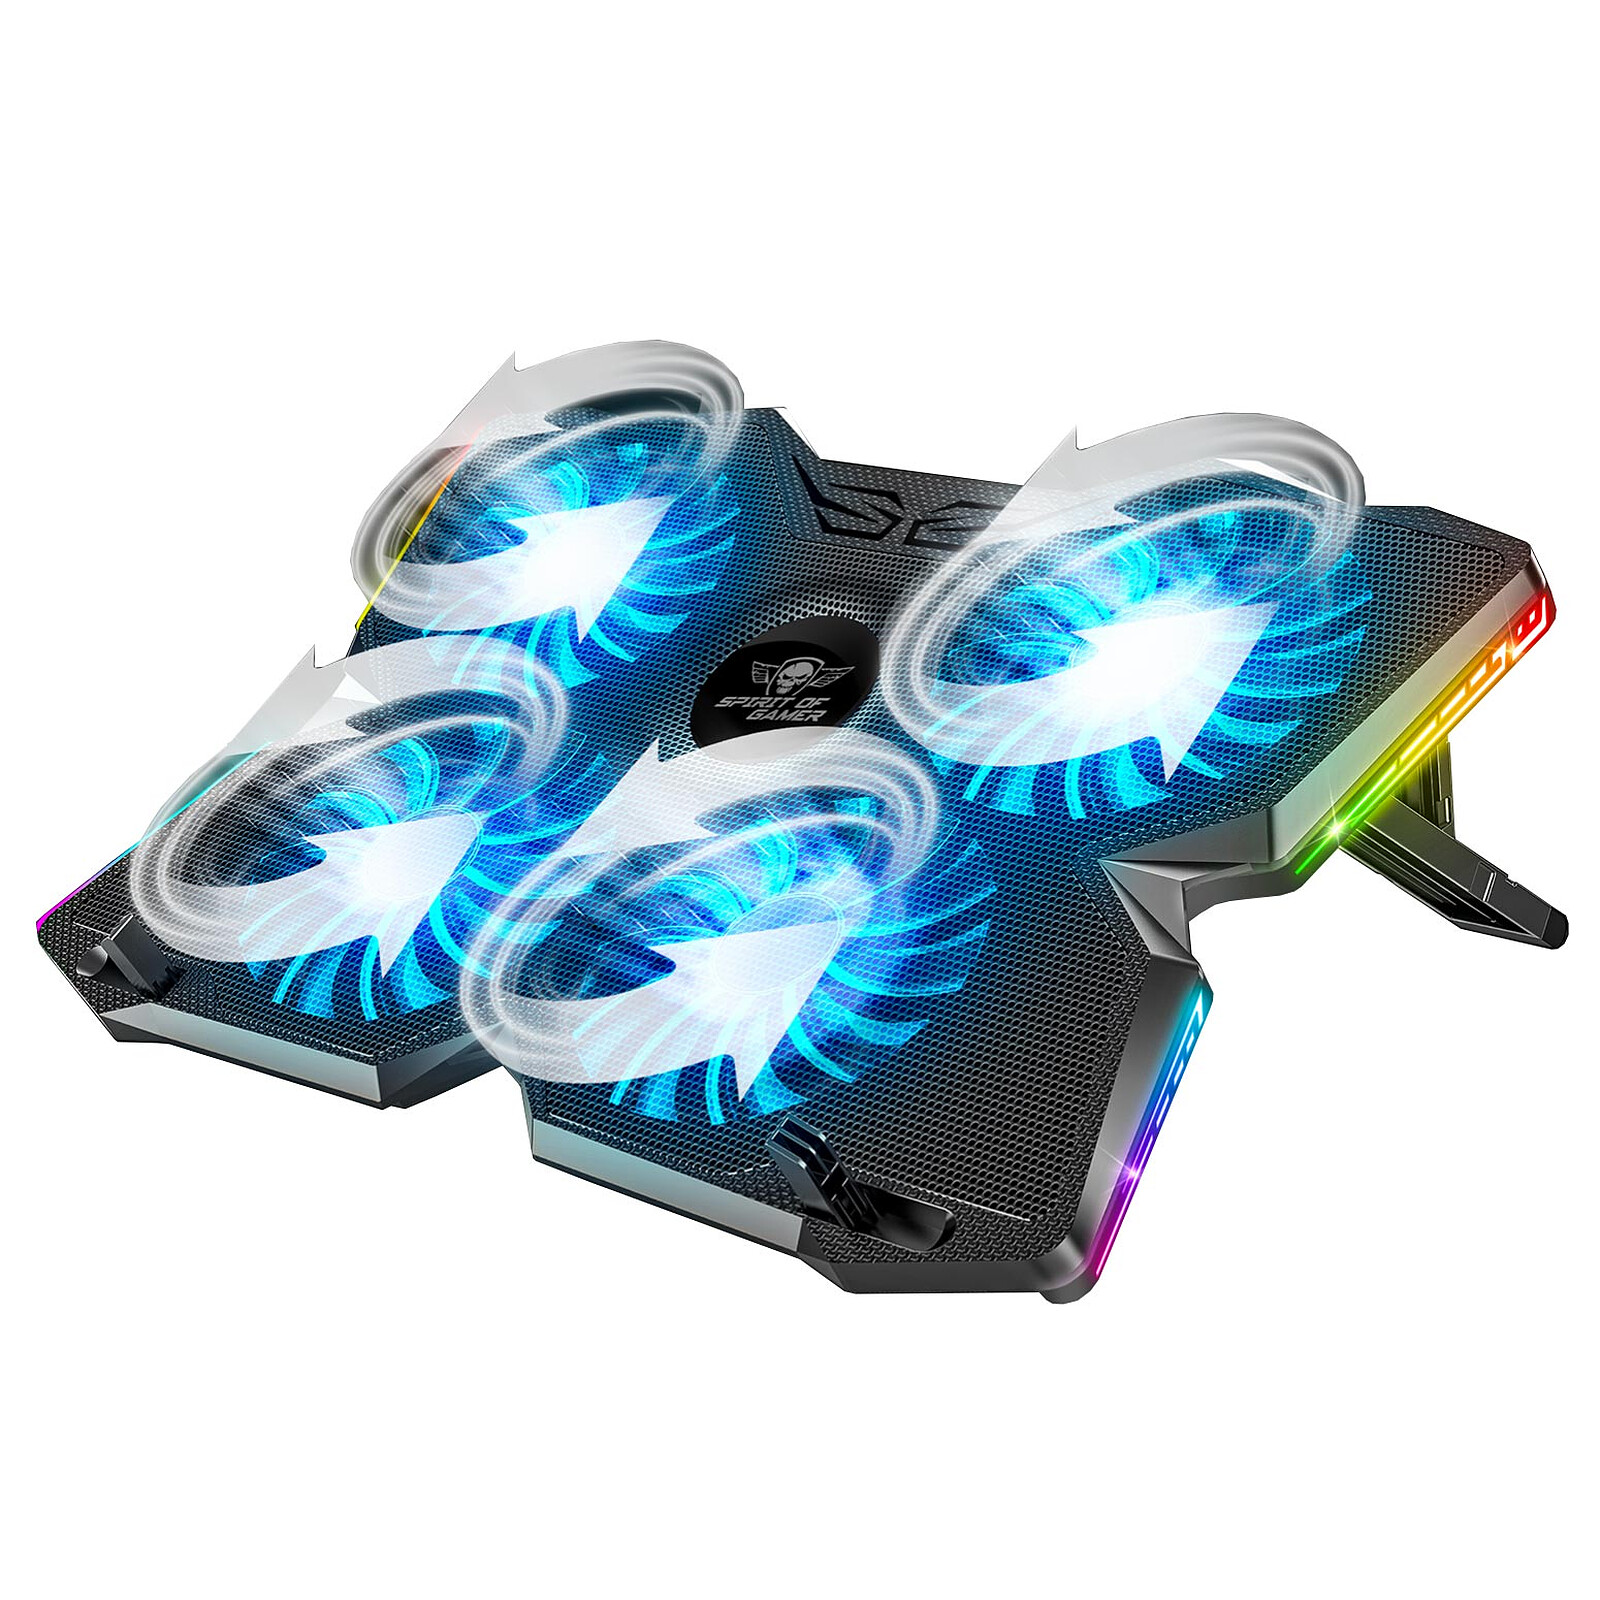 Spirit of Gamer Airblade 1200 RGB - Ventilateur PC portable